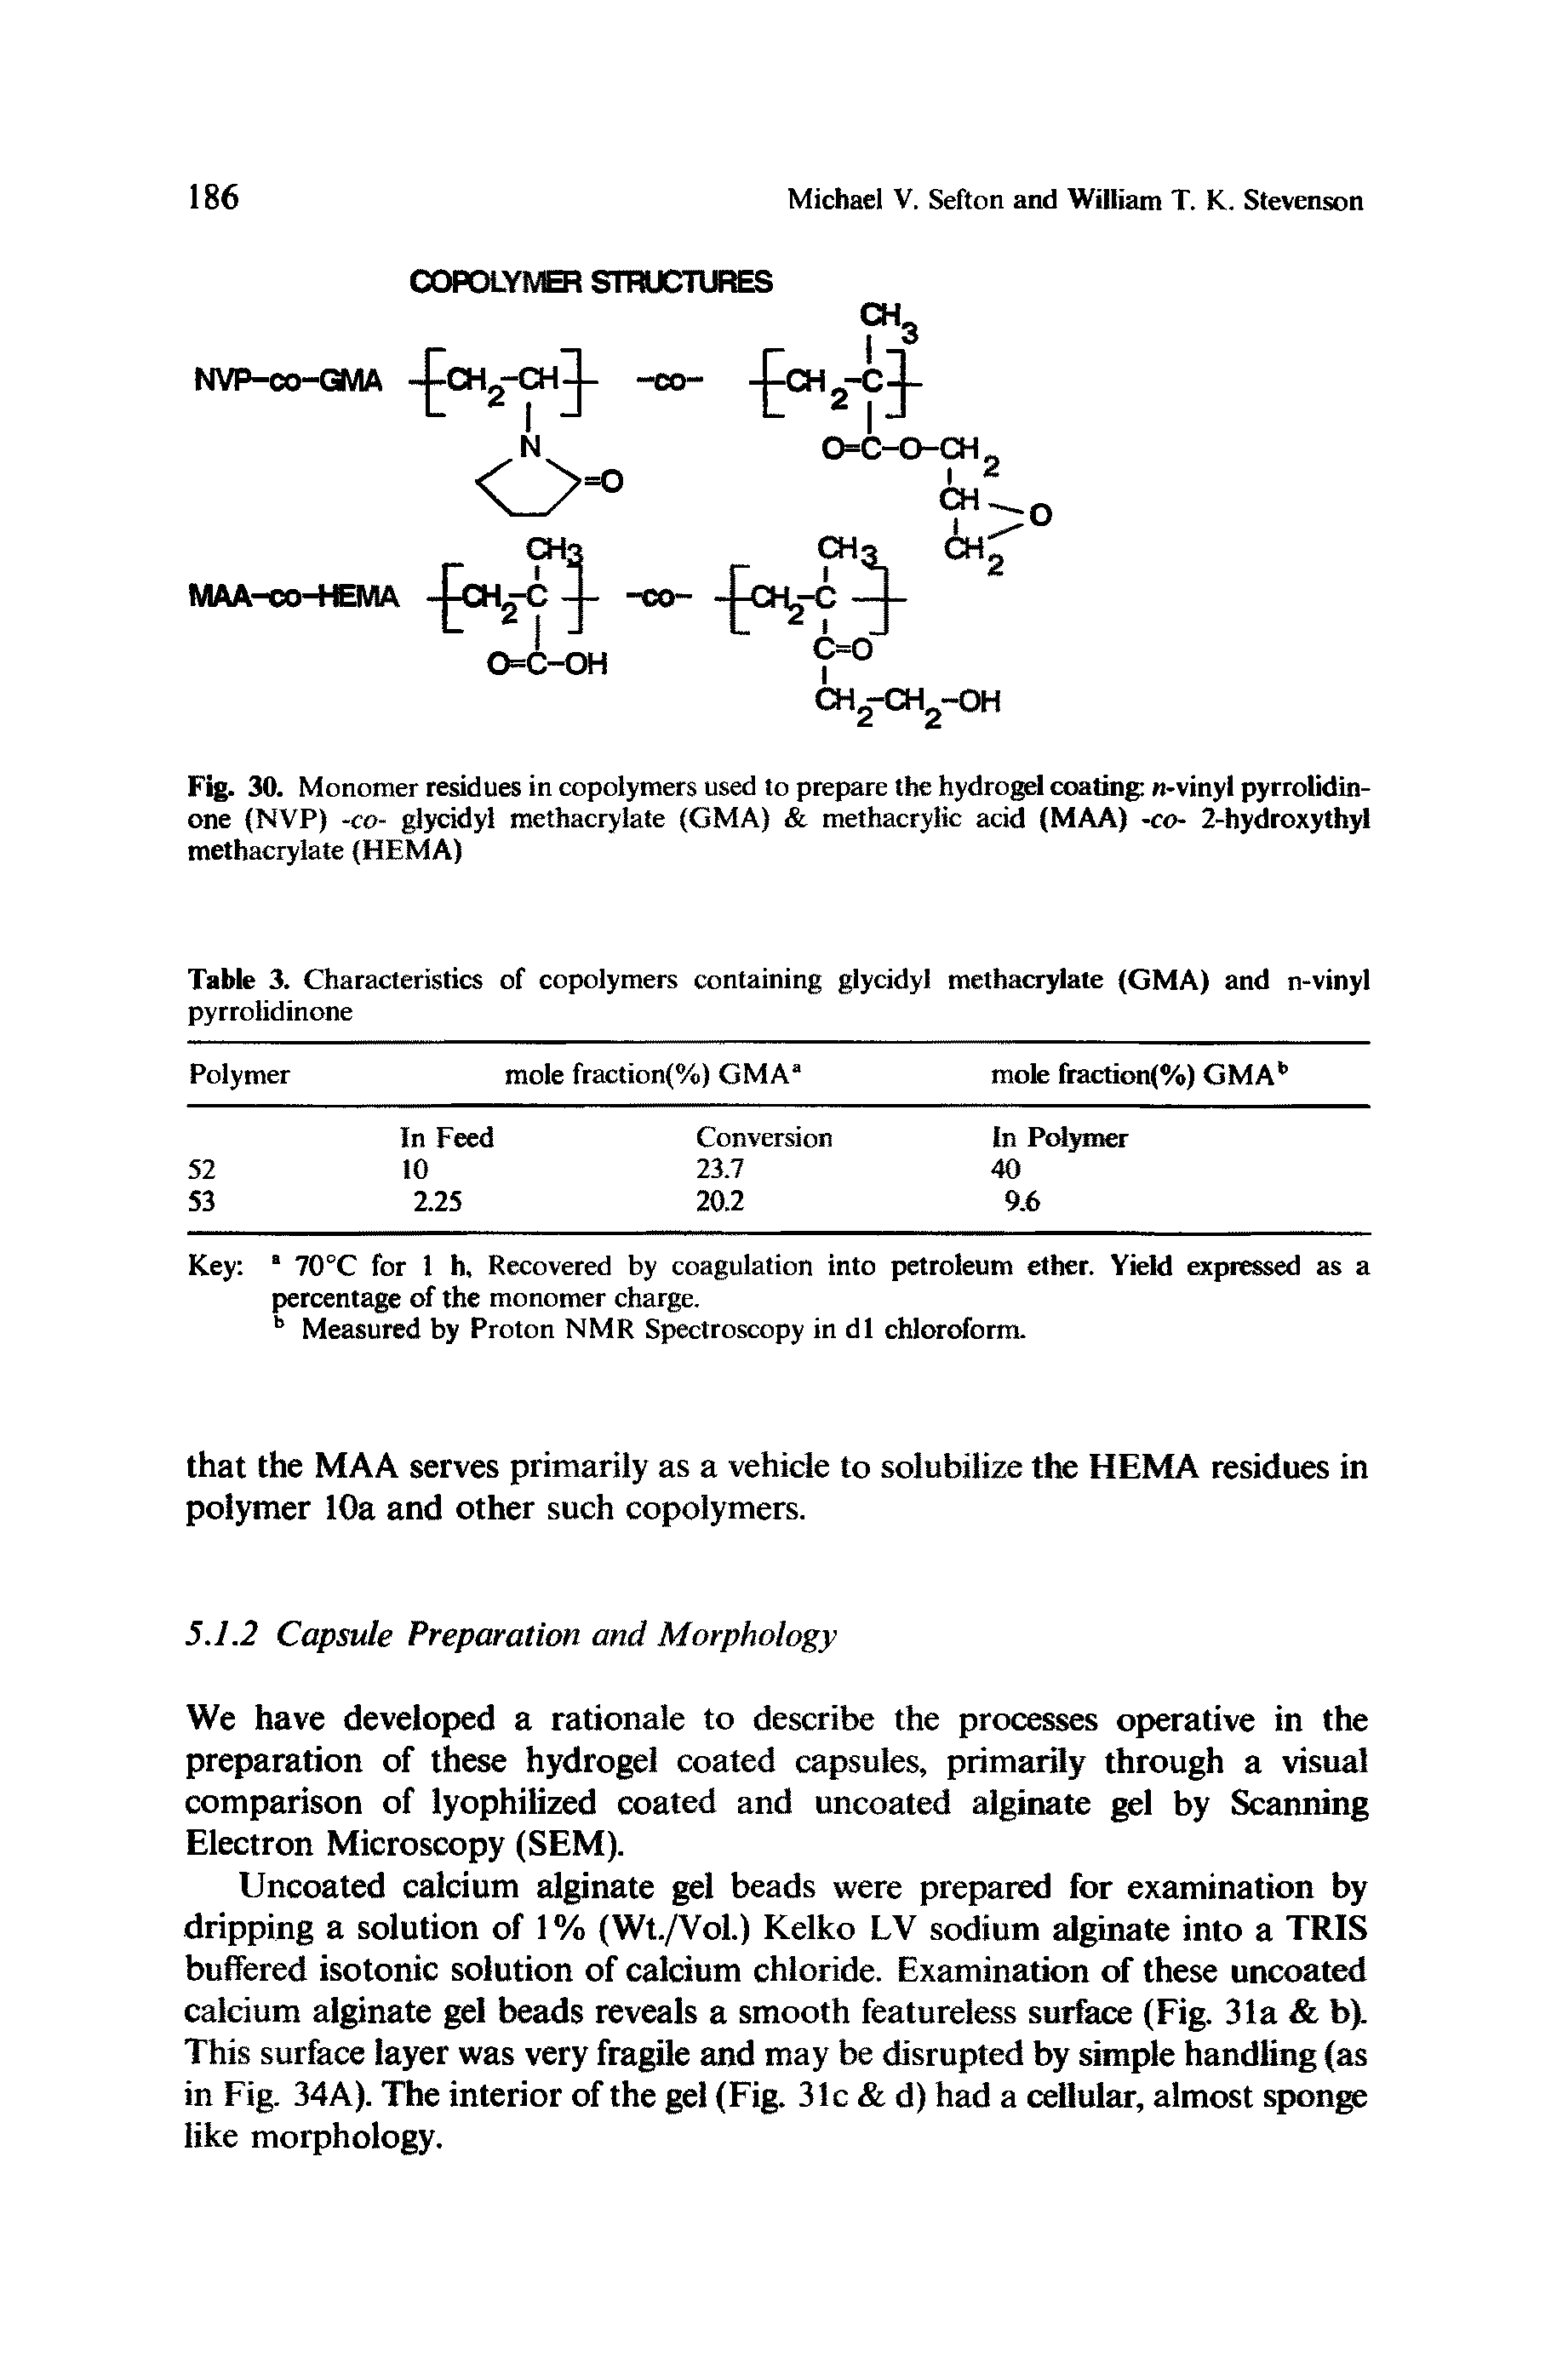 Fig. 30. Monomer residues in copolymers used to prepare the hydrogel coating n-vinyl pyrrolidin-one (NVP) -co- glycidyl methacrylate (GMA) methacrylic acid (MAA) -co- 2-hydroxythyl methacrylate (HEMA)...